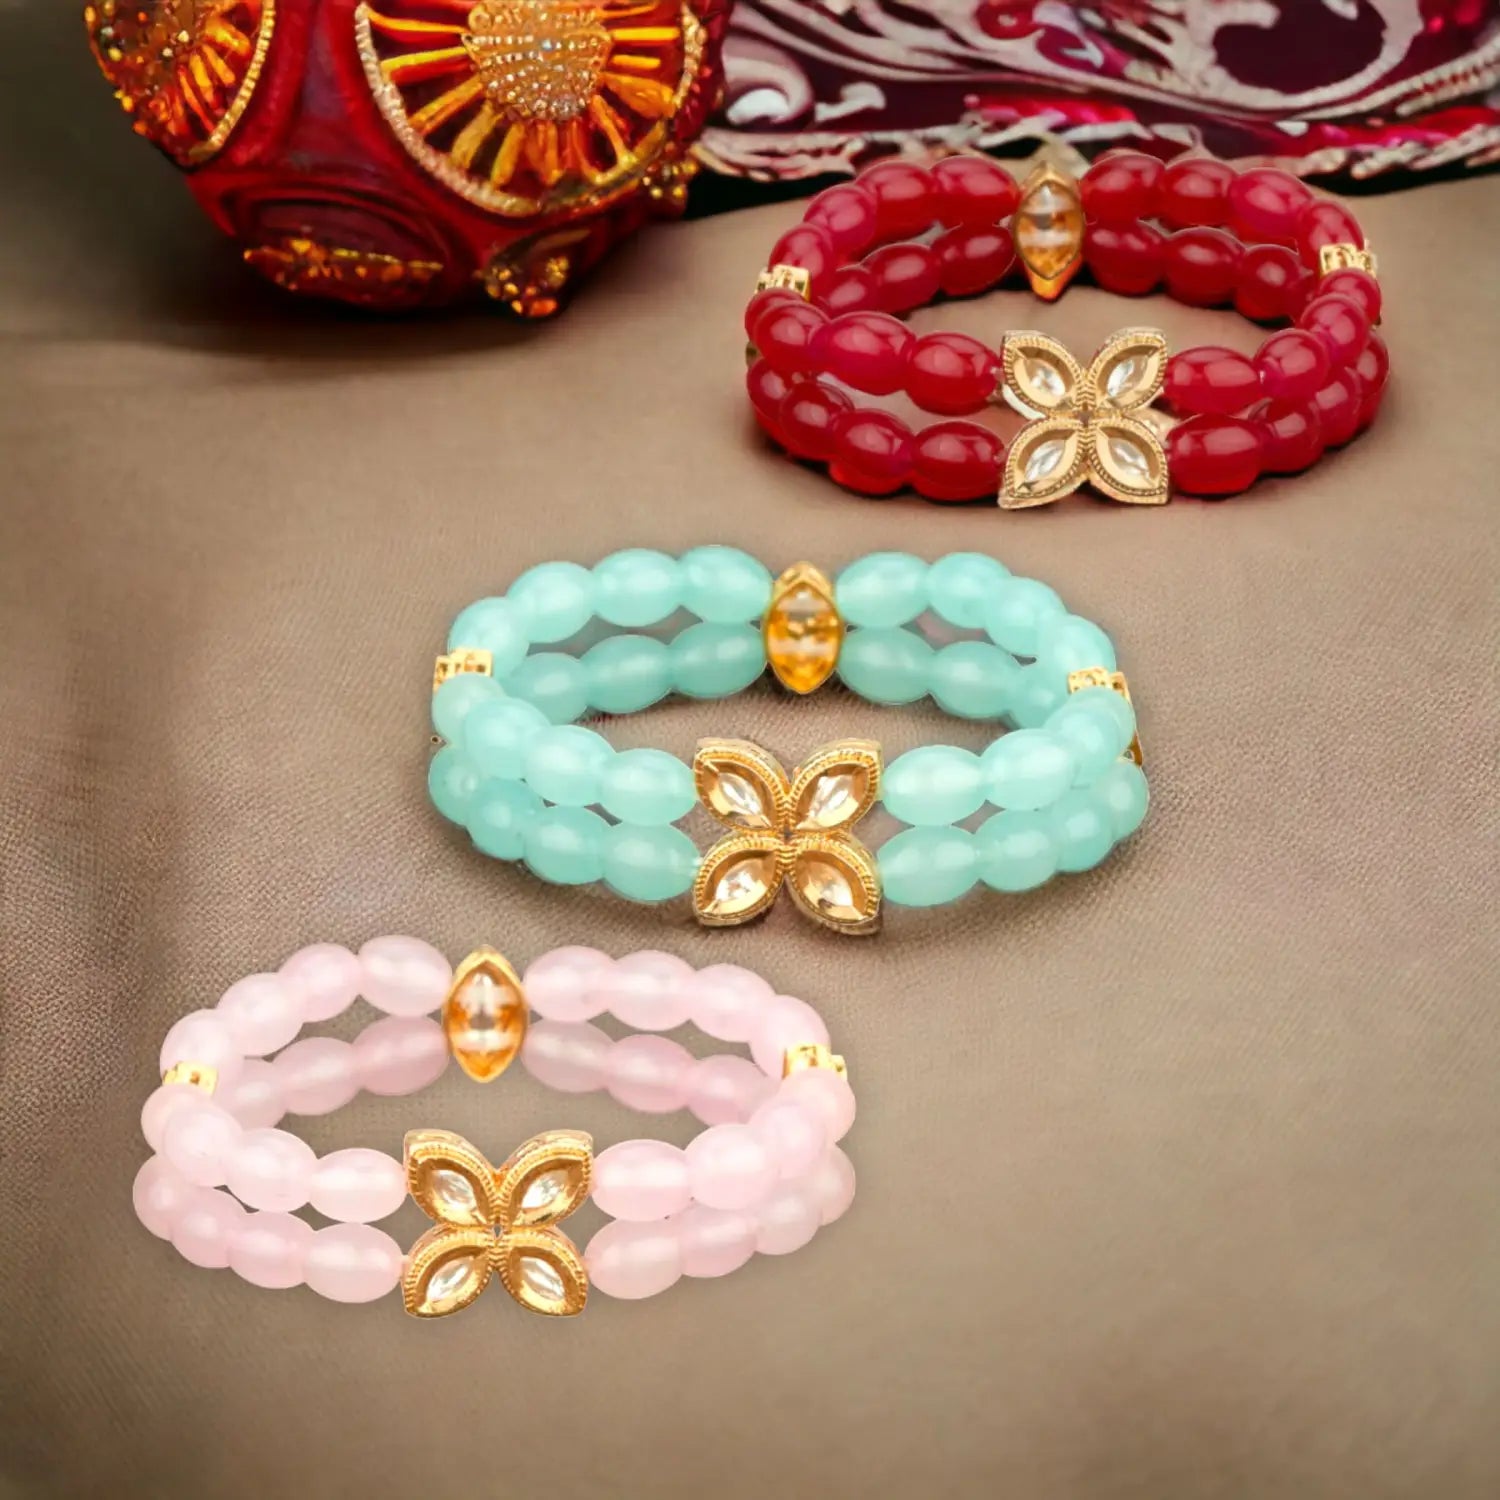 Ethnic Bracelet Collection